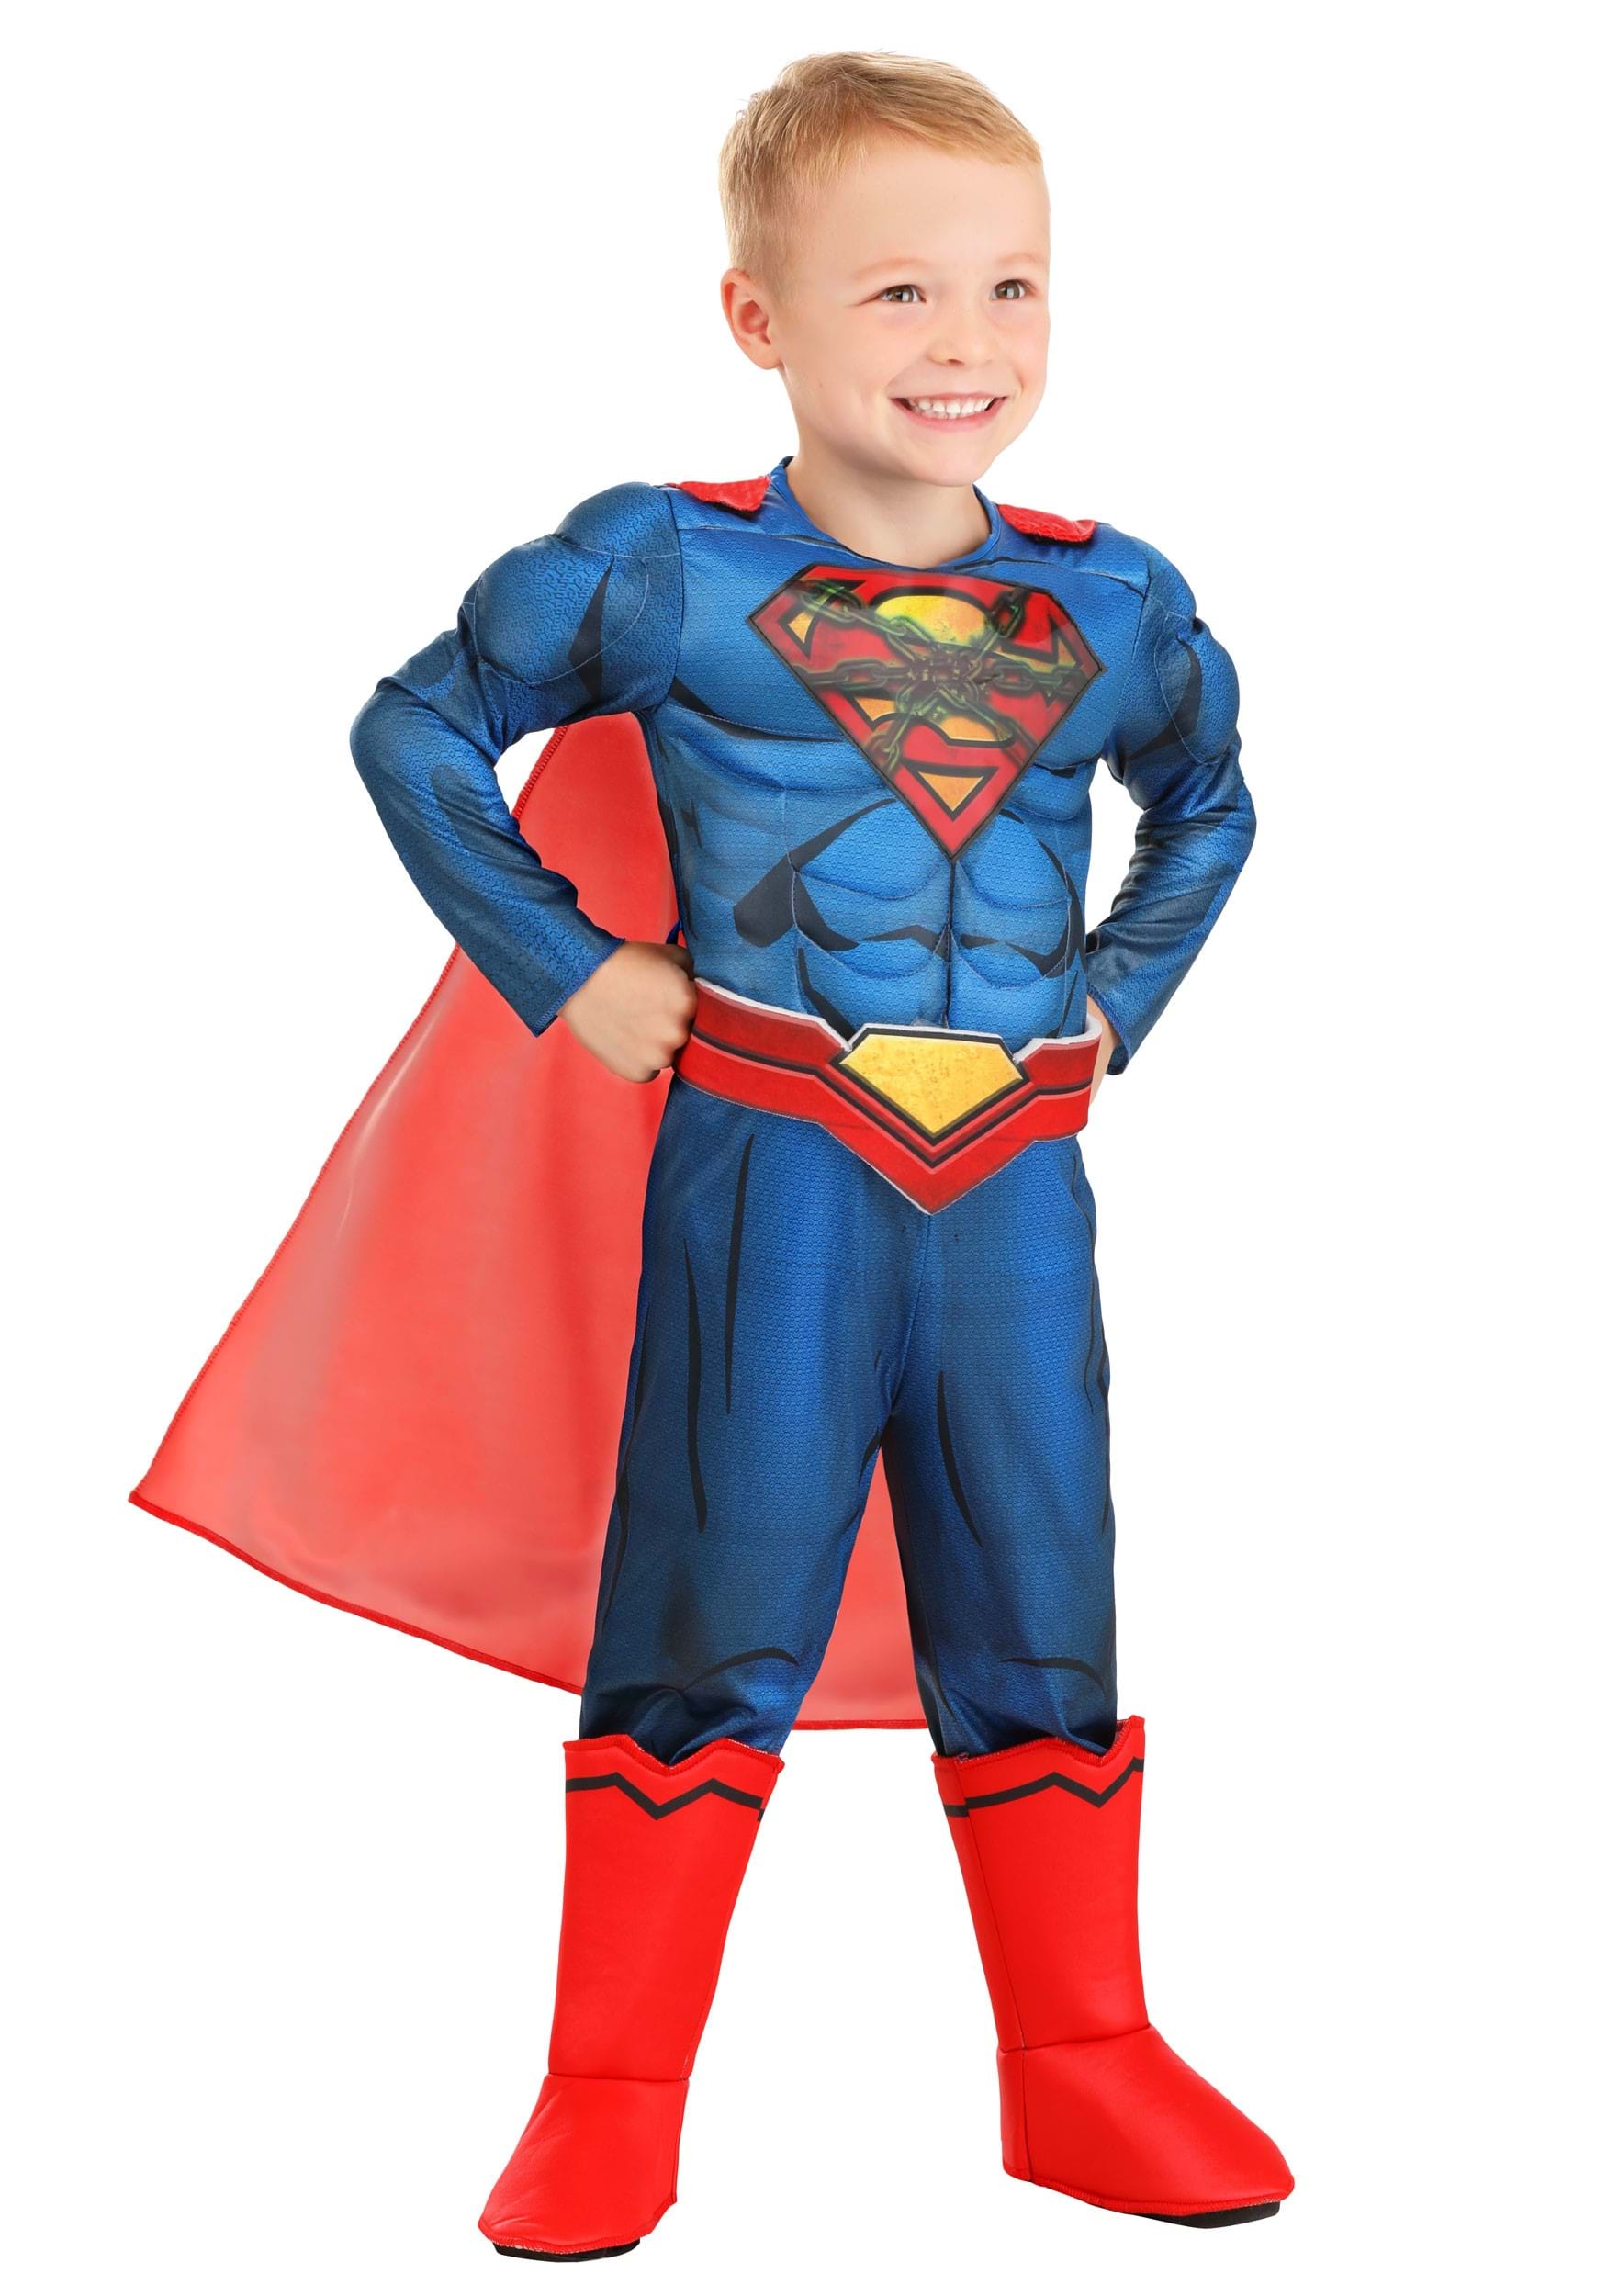 DC Comics Superman Deluxe Toddler Costume